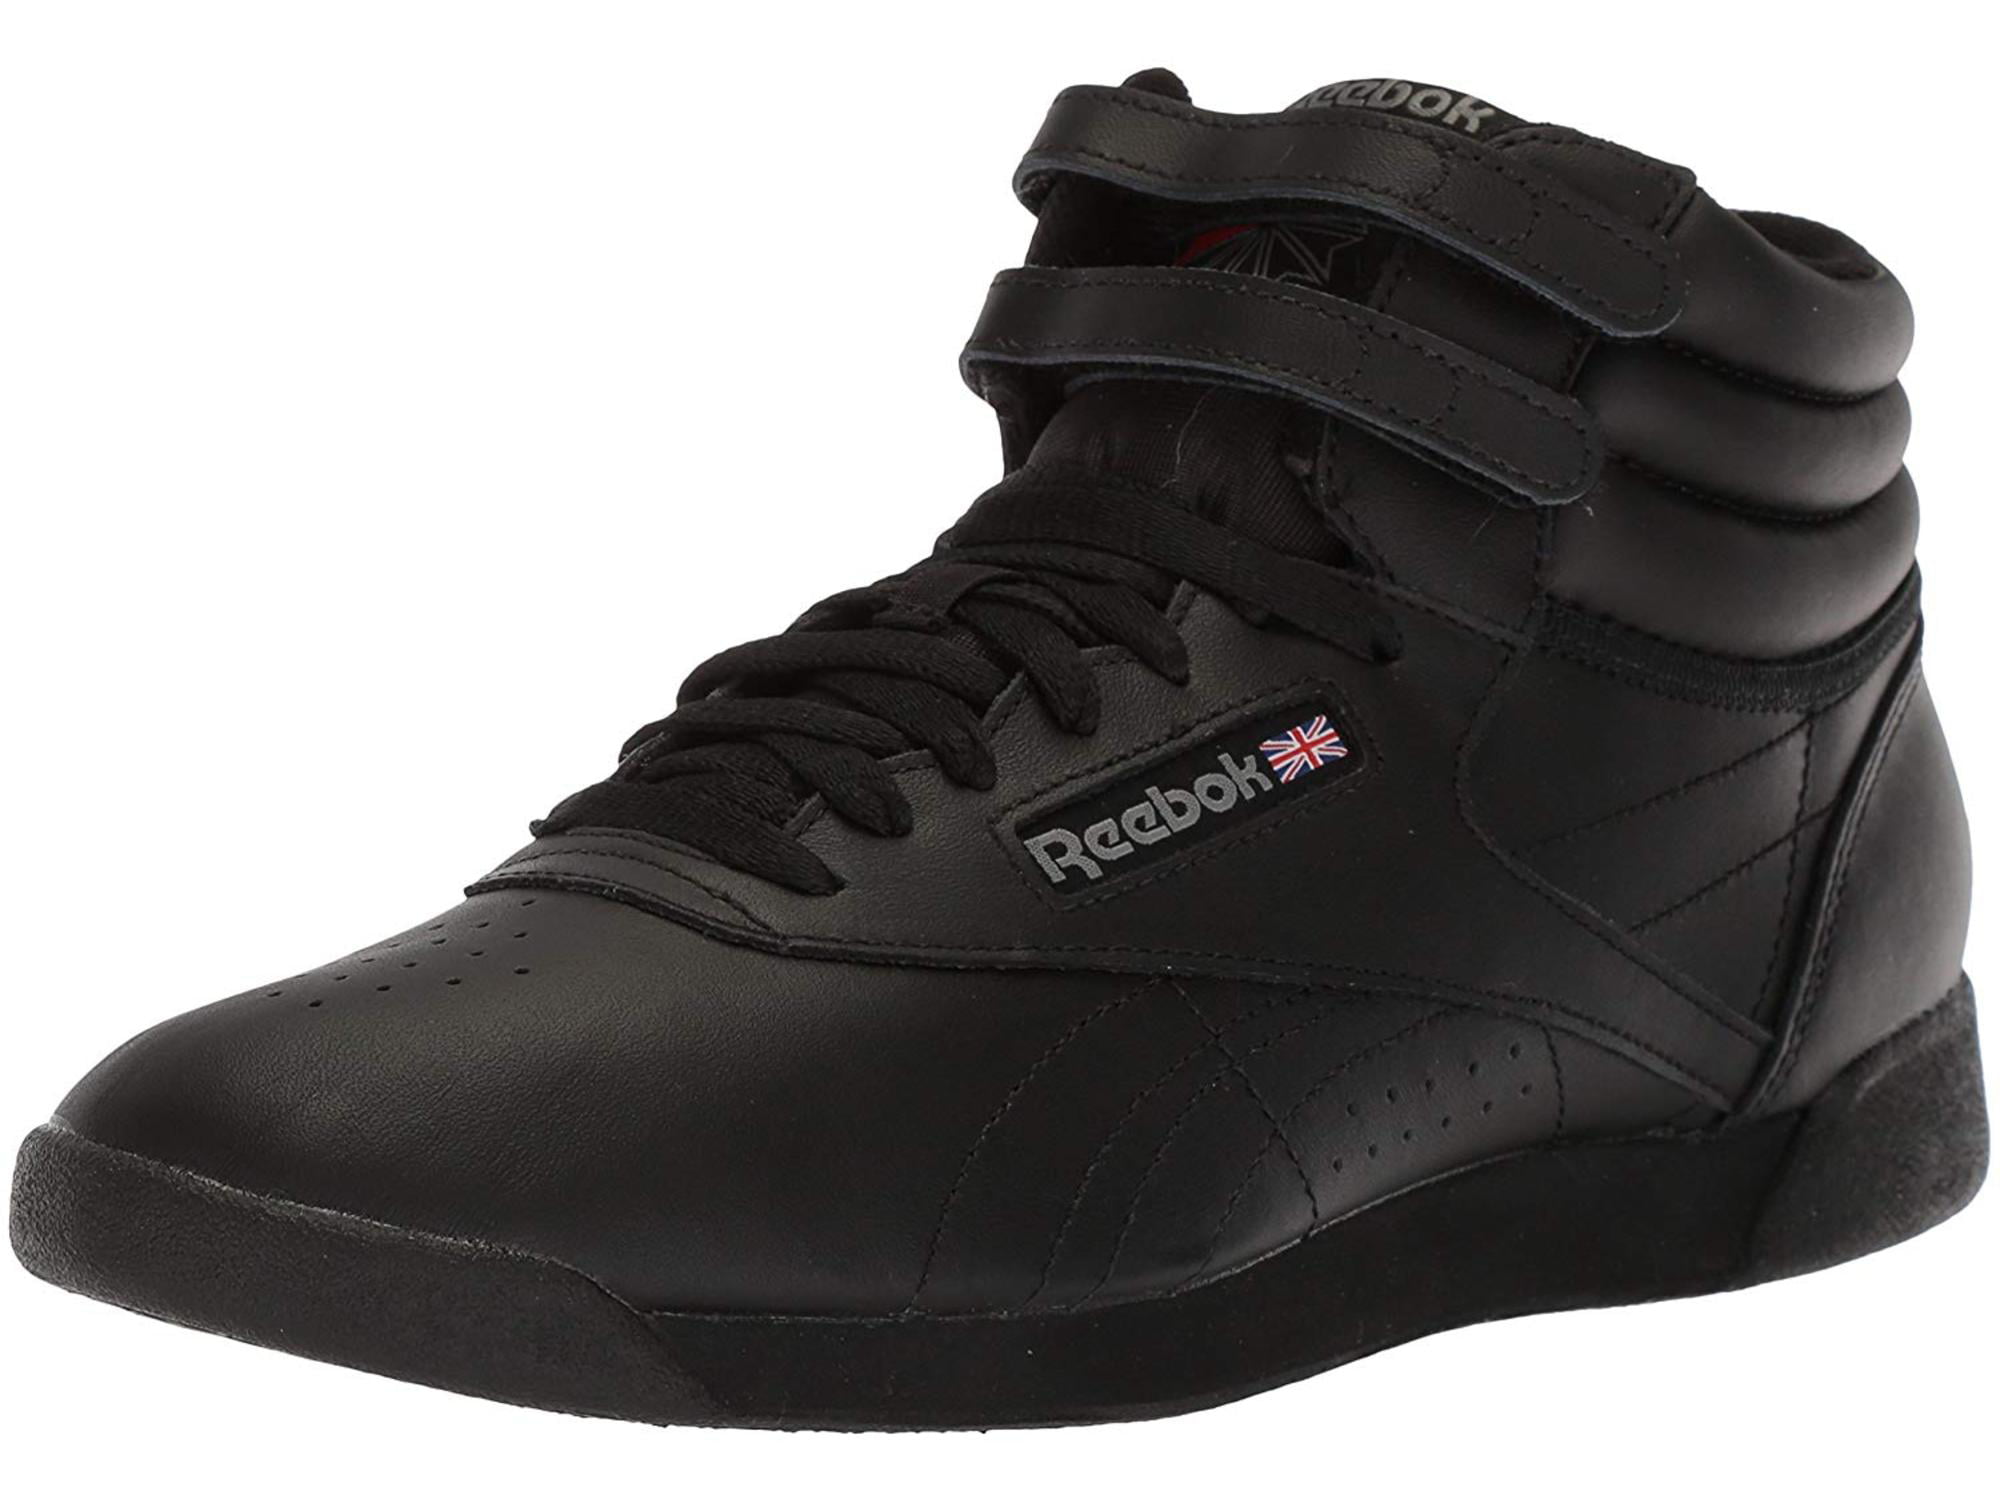 Reebok - reebok 71 classic leather hi top sneaker - black - Walmart.com